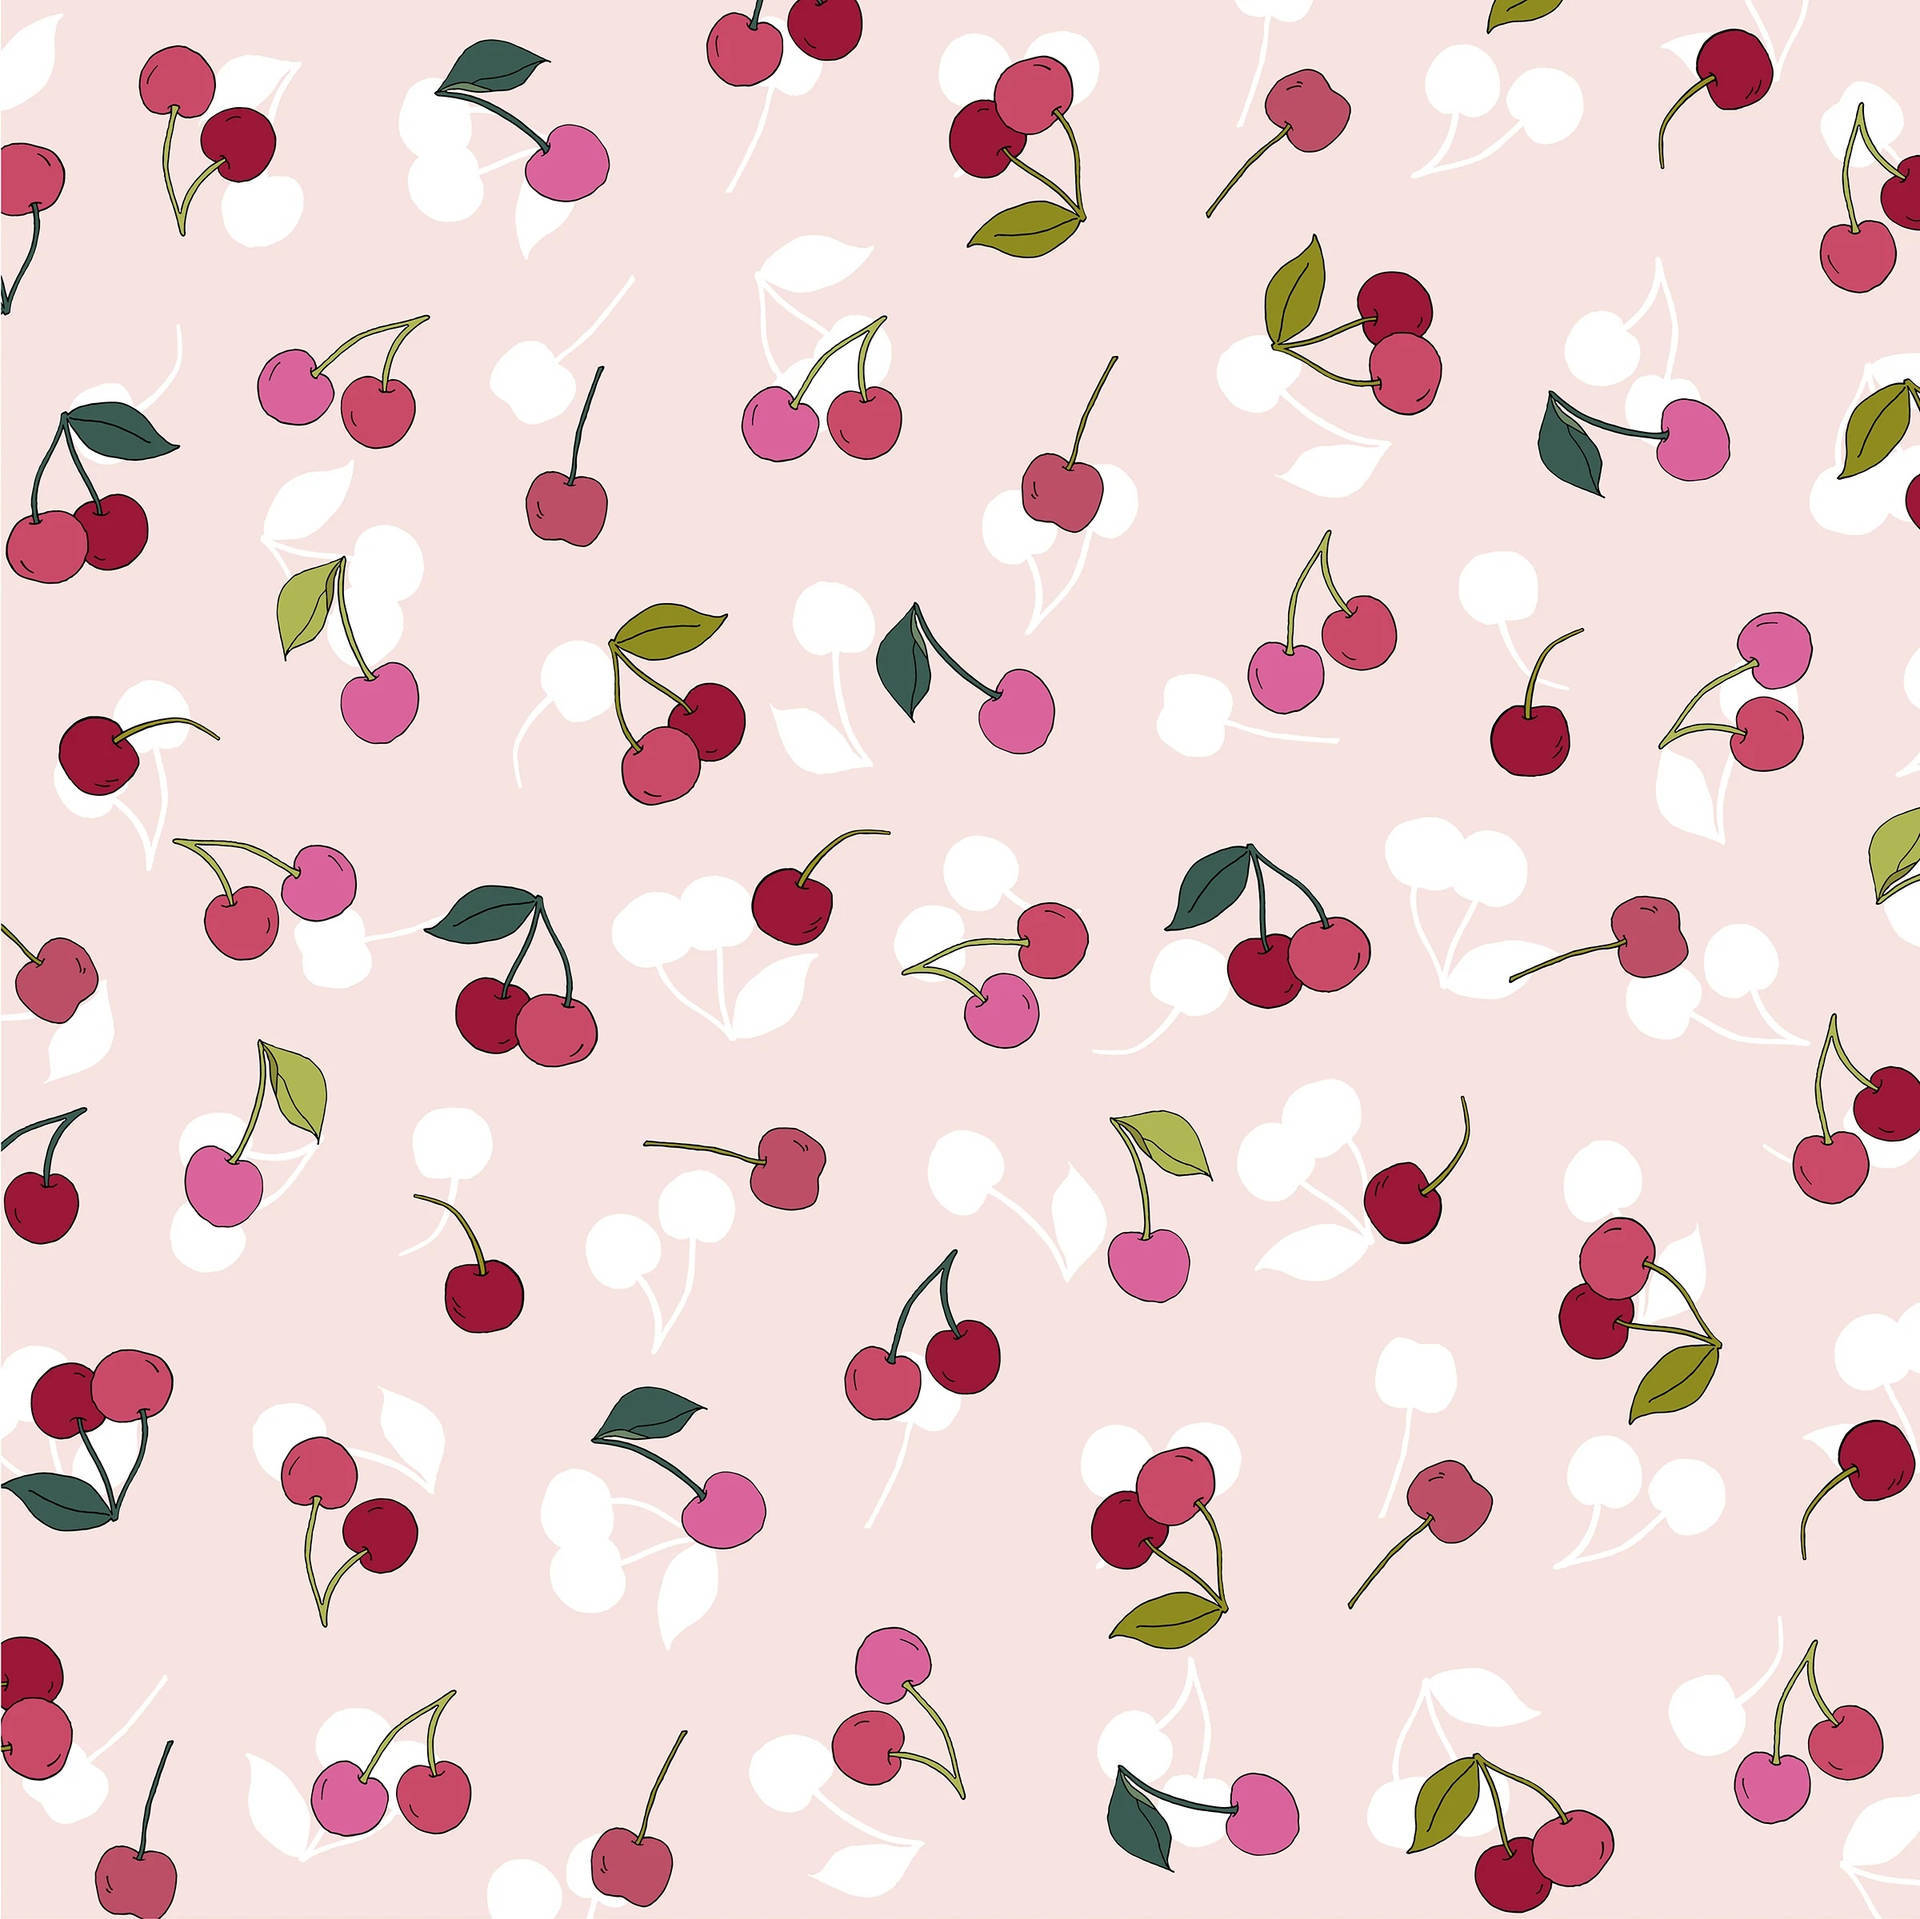 Ipad Pro Cute Cherry Fruits Background